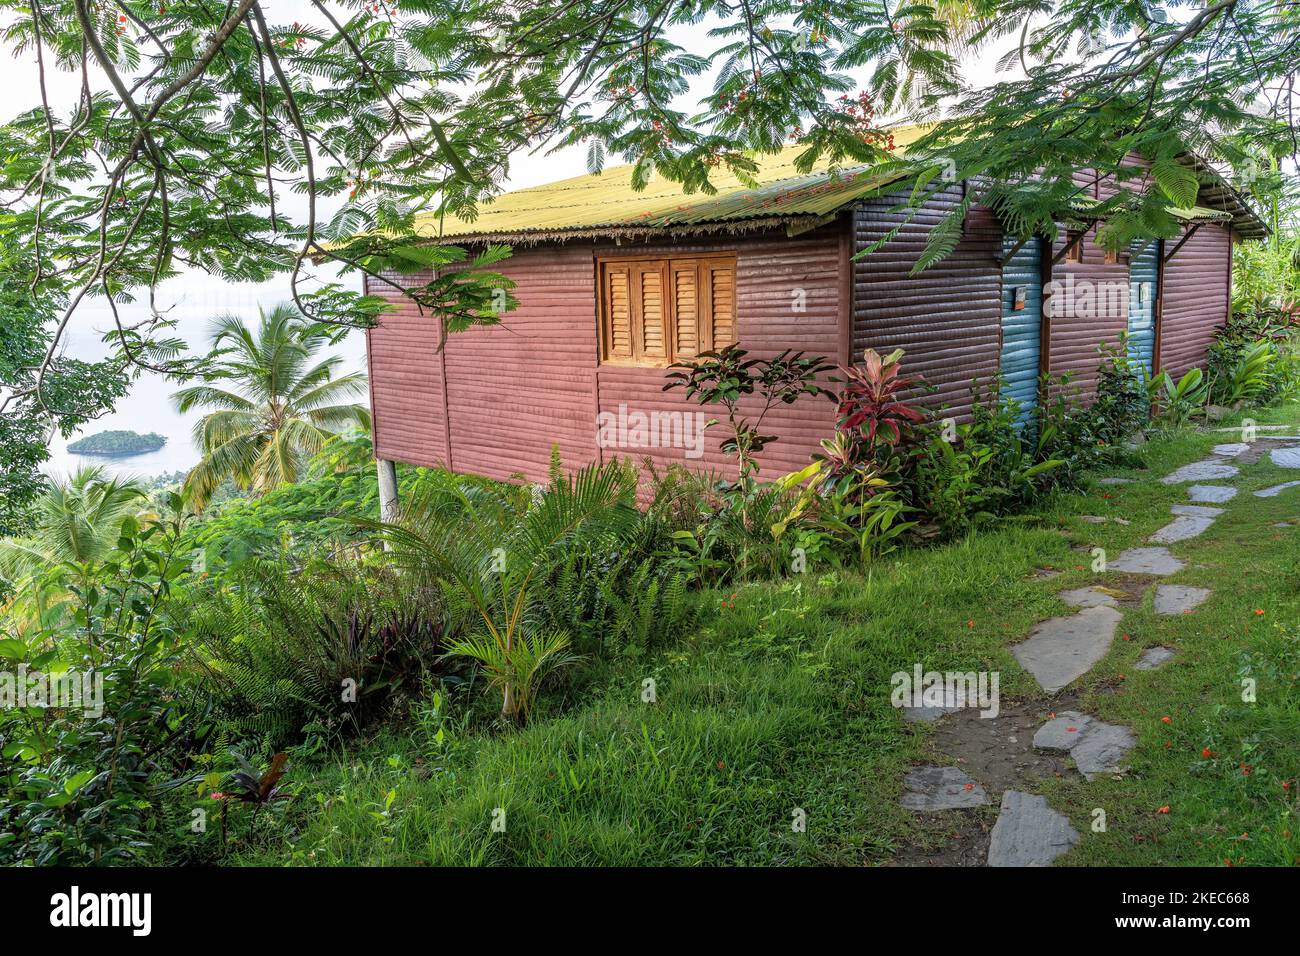 North America, Caribbean, Greater Antilles, Hispaniola Island, Dominican Republic, Sama, Picturesque wooden house at Boutique Hotel Hacienda Cocuyo Stock Photo